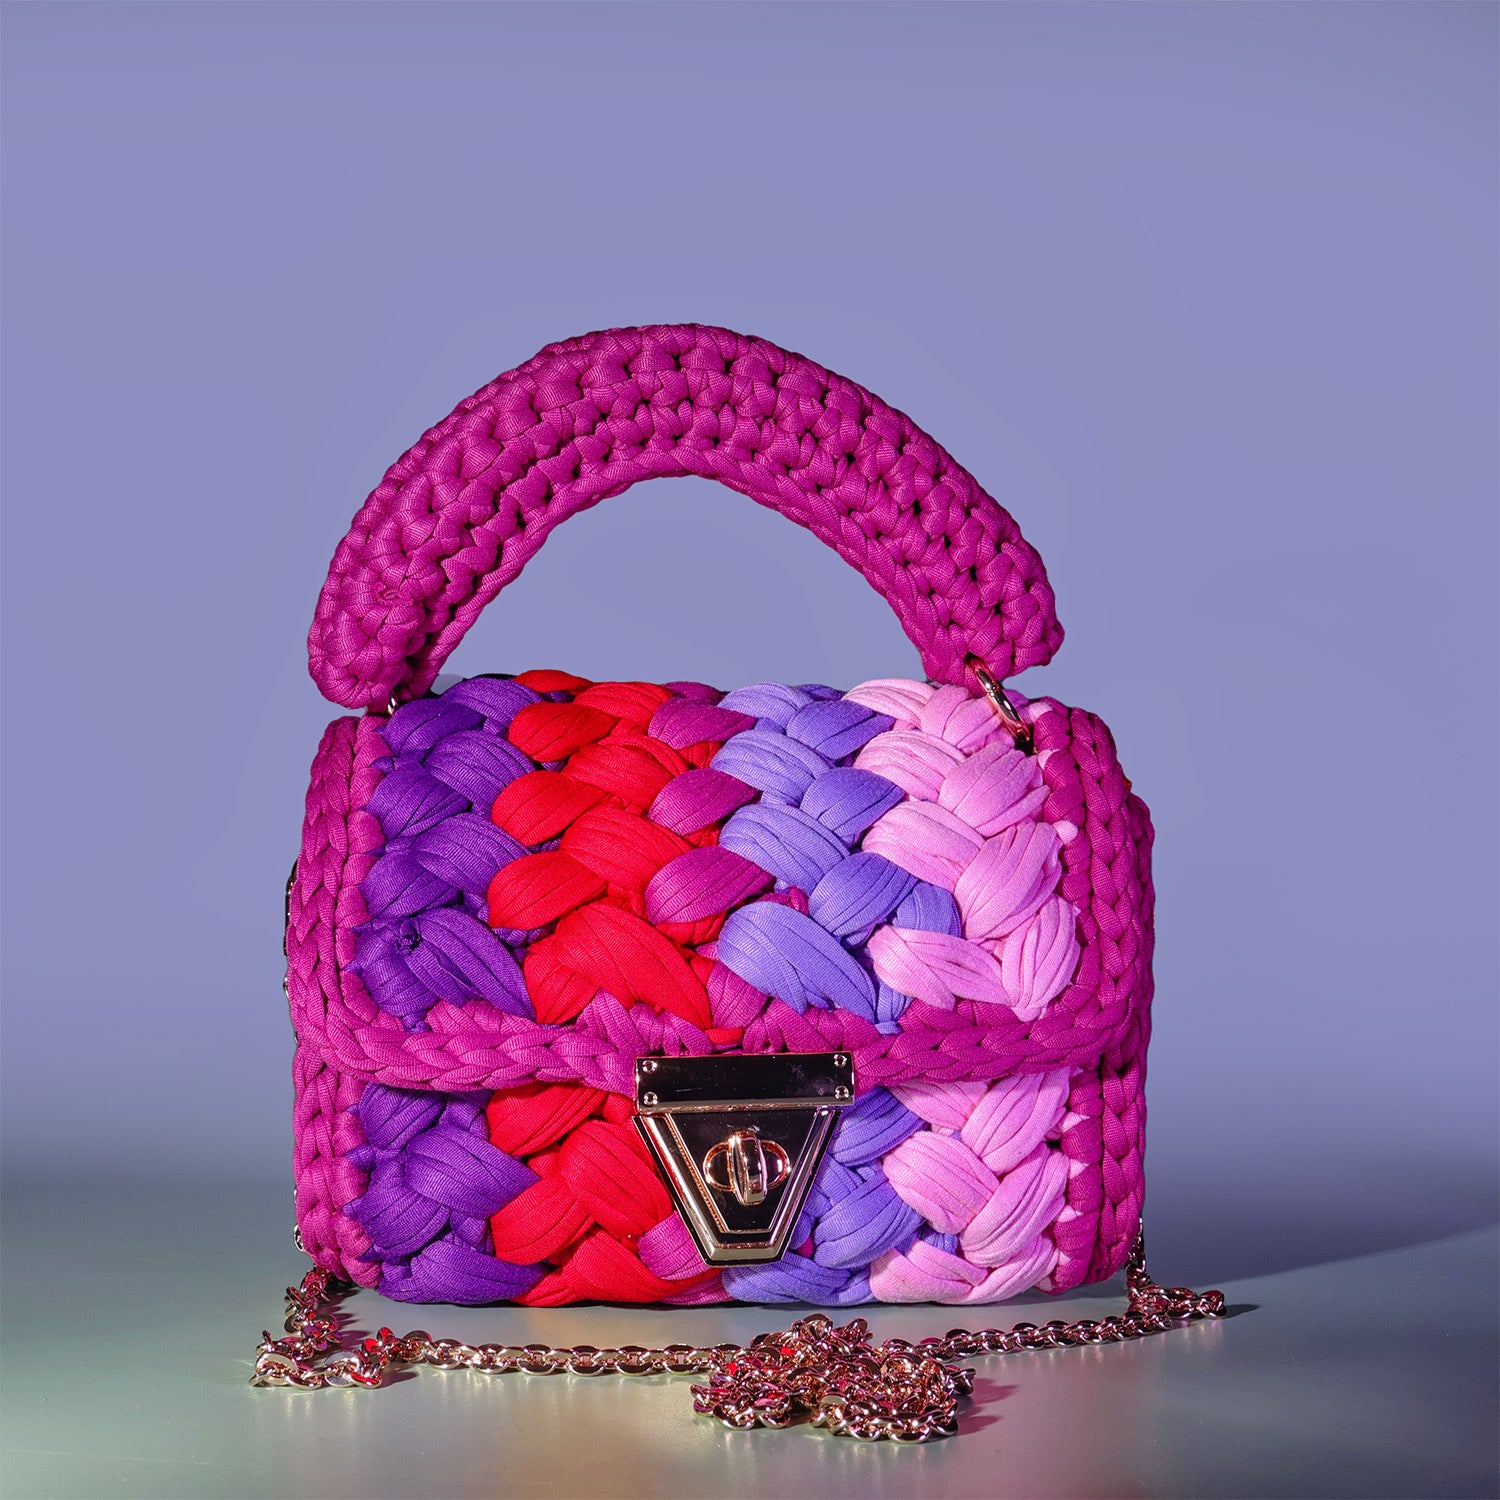 Harmony Woven Crochet Handbag in Pink